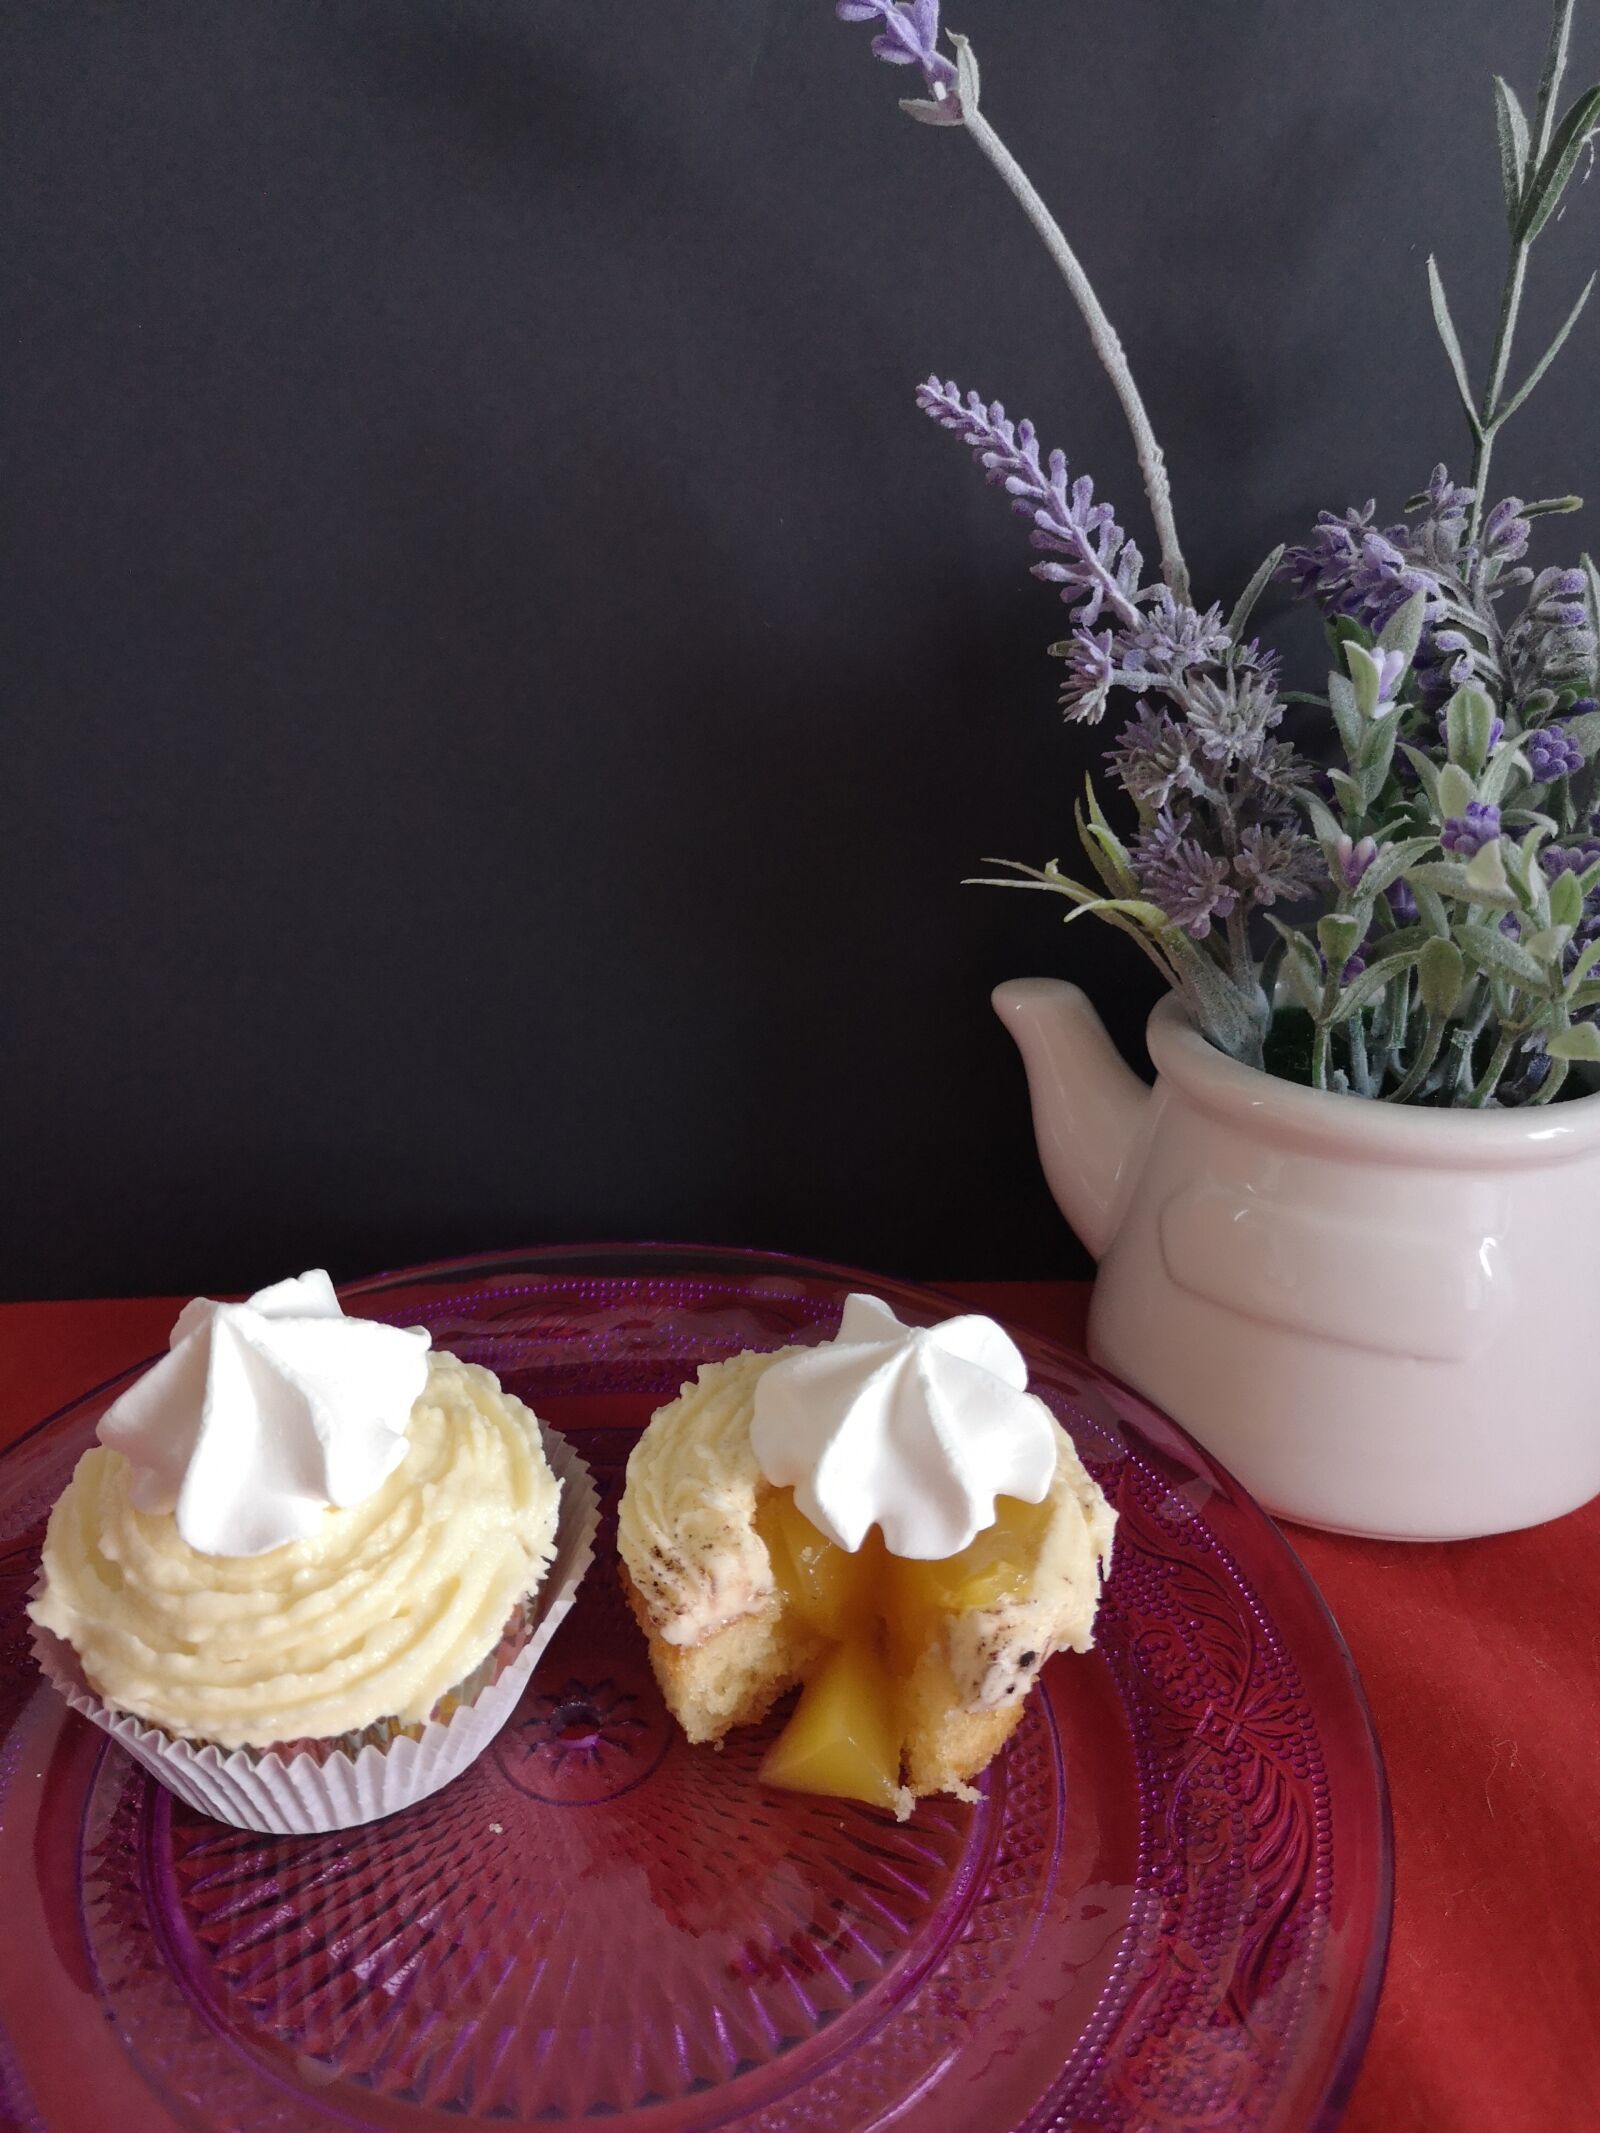 HUAWEI P20 sample photo. Lemon, meringue, cupcake photography